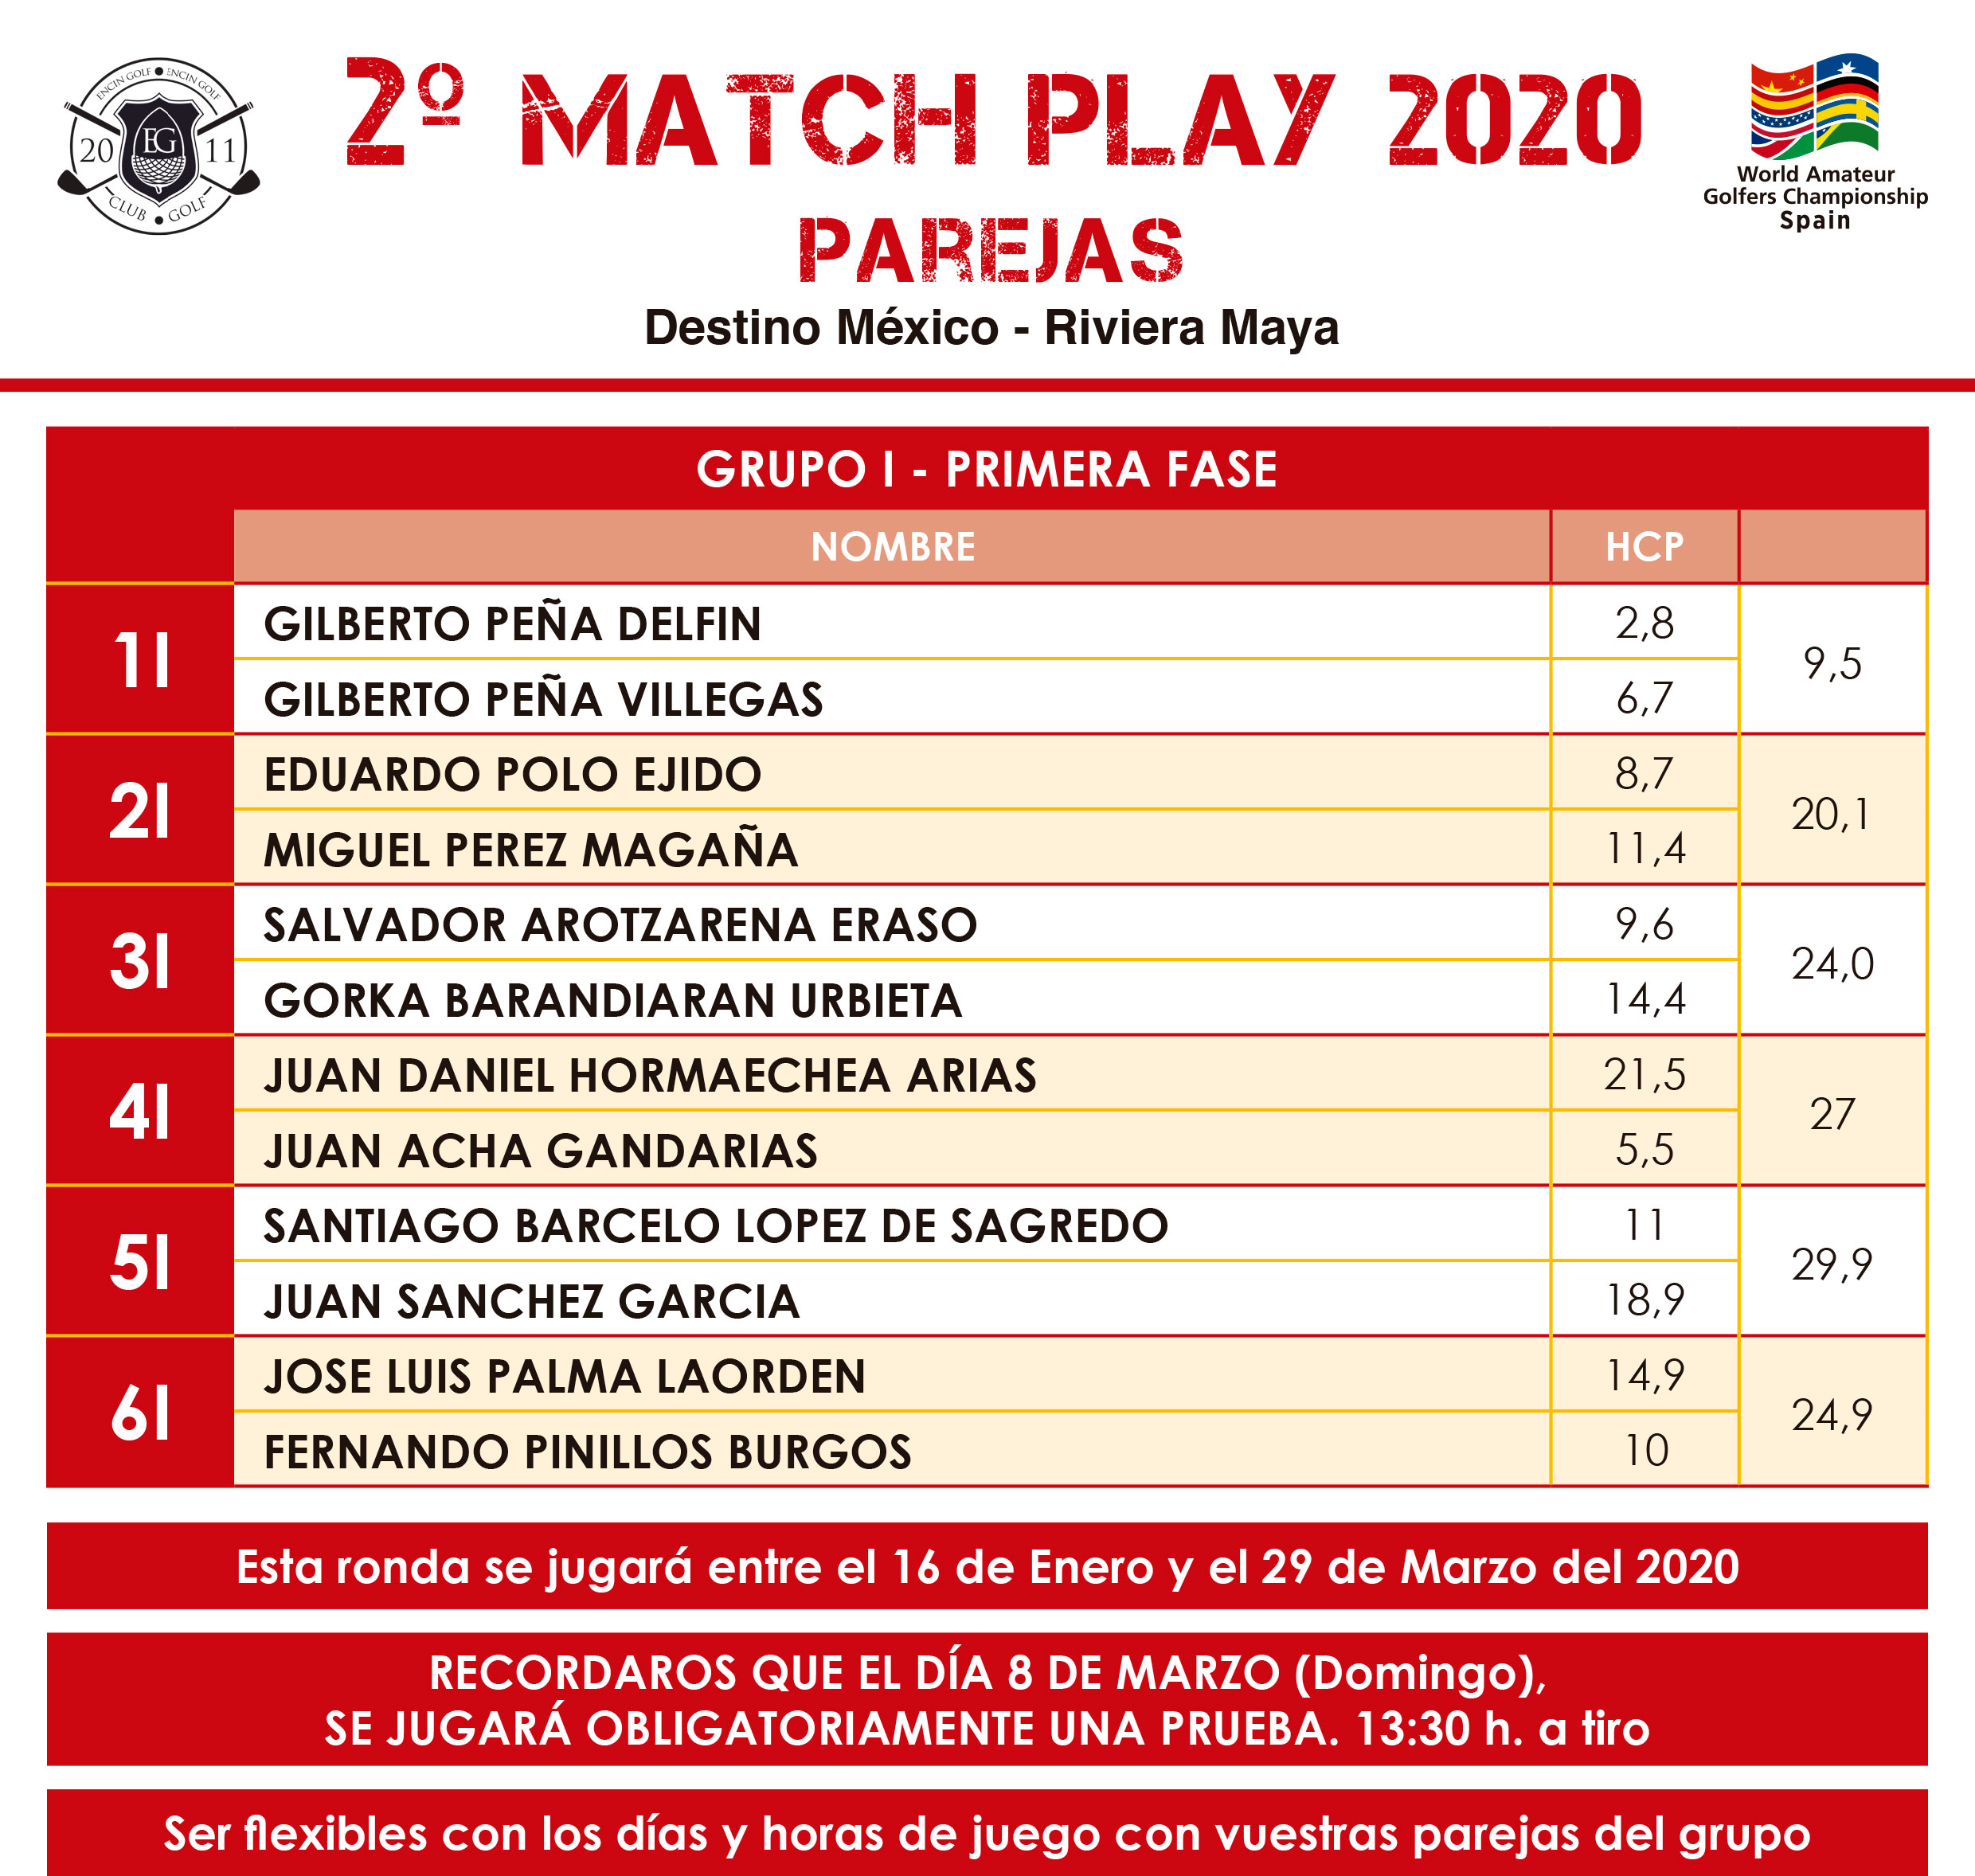 WAGC SPAIN - MATCH PLAY 2020 PAREJAS - 1ª FASE - GRUPO I